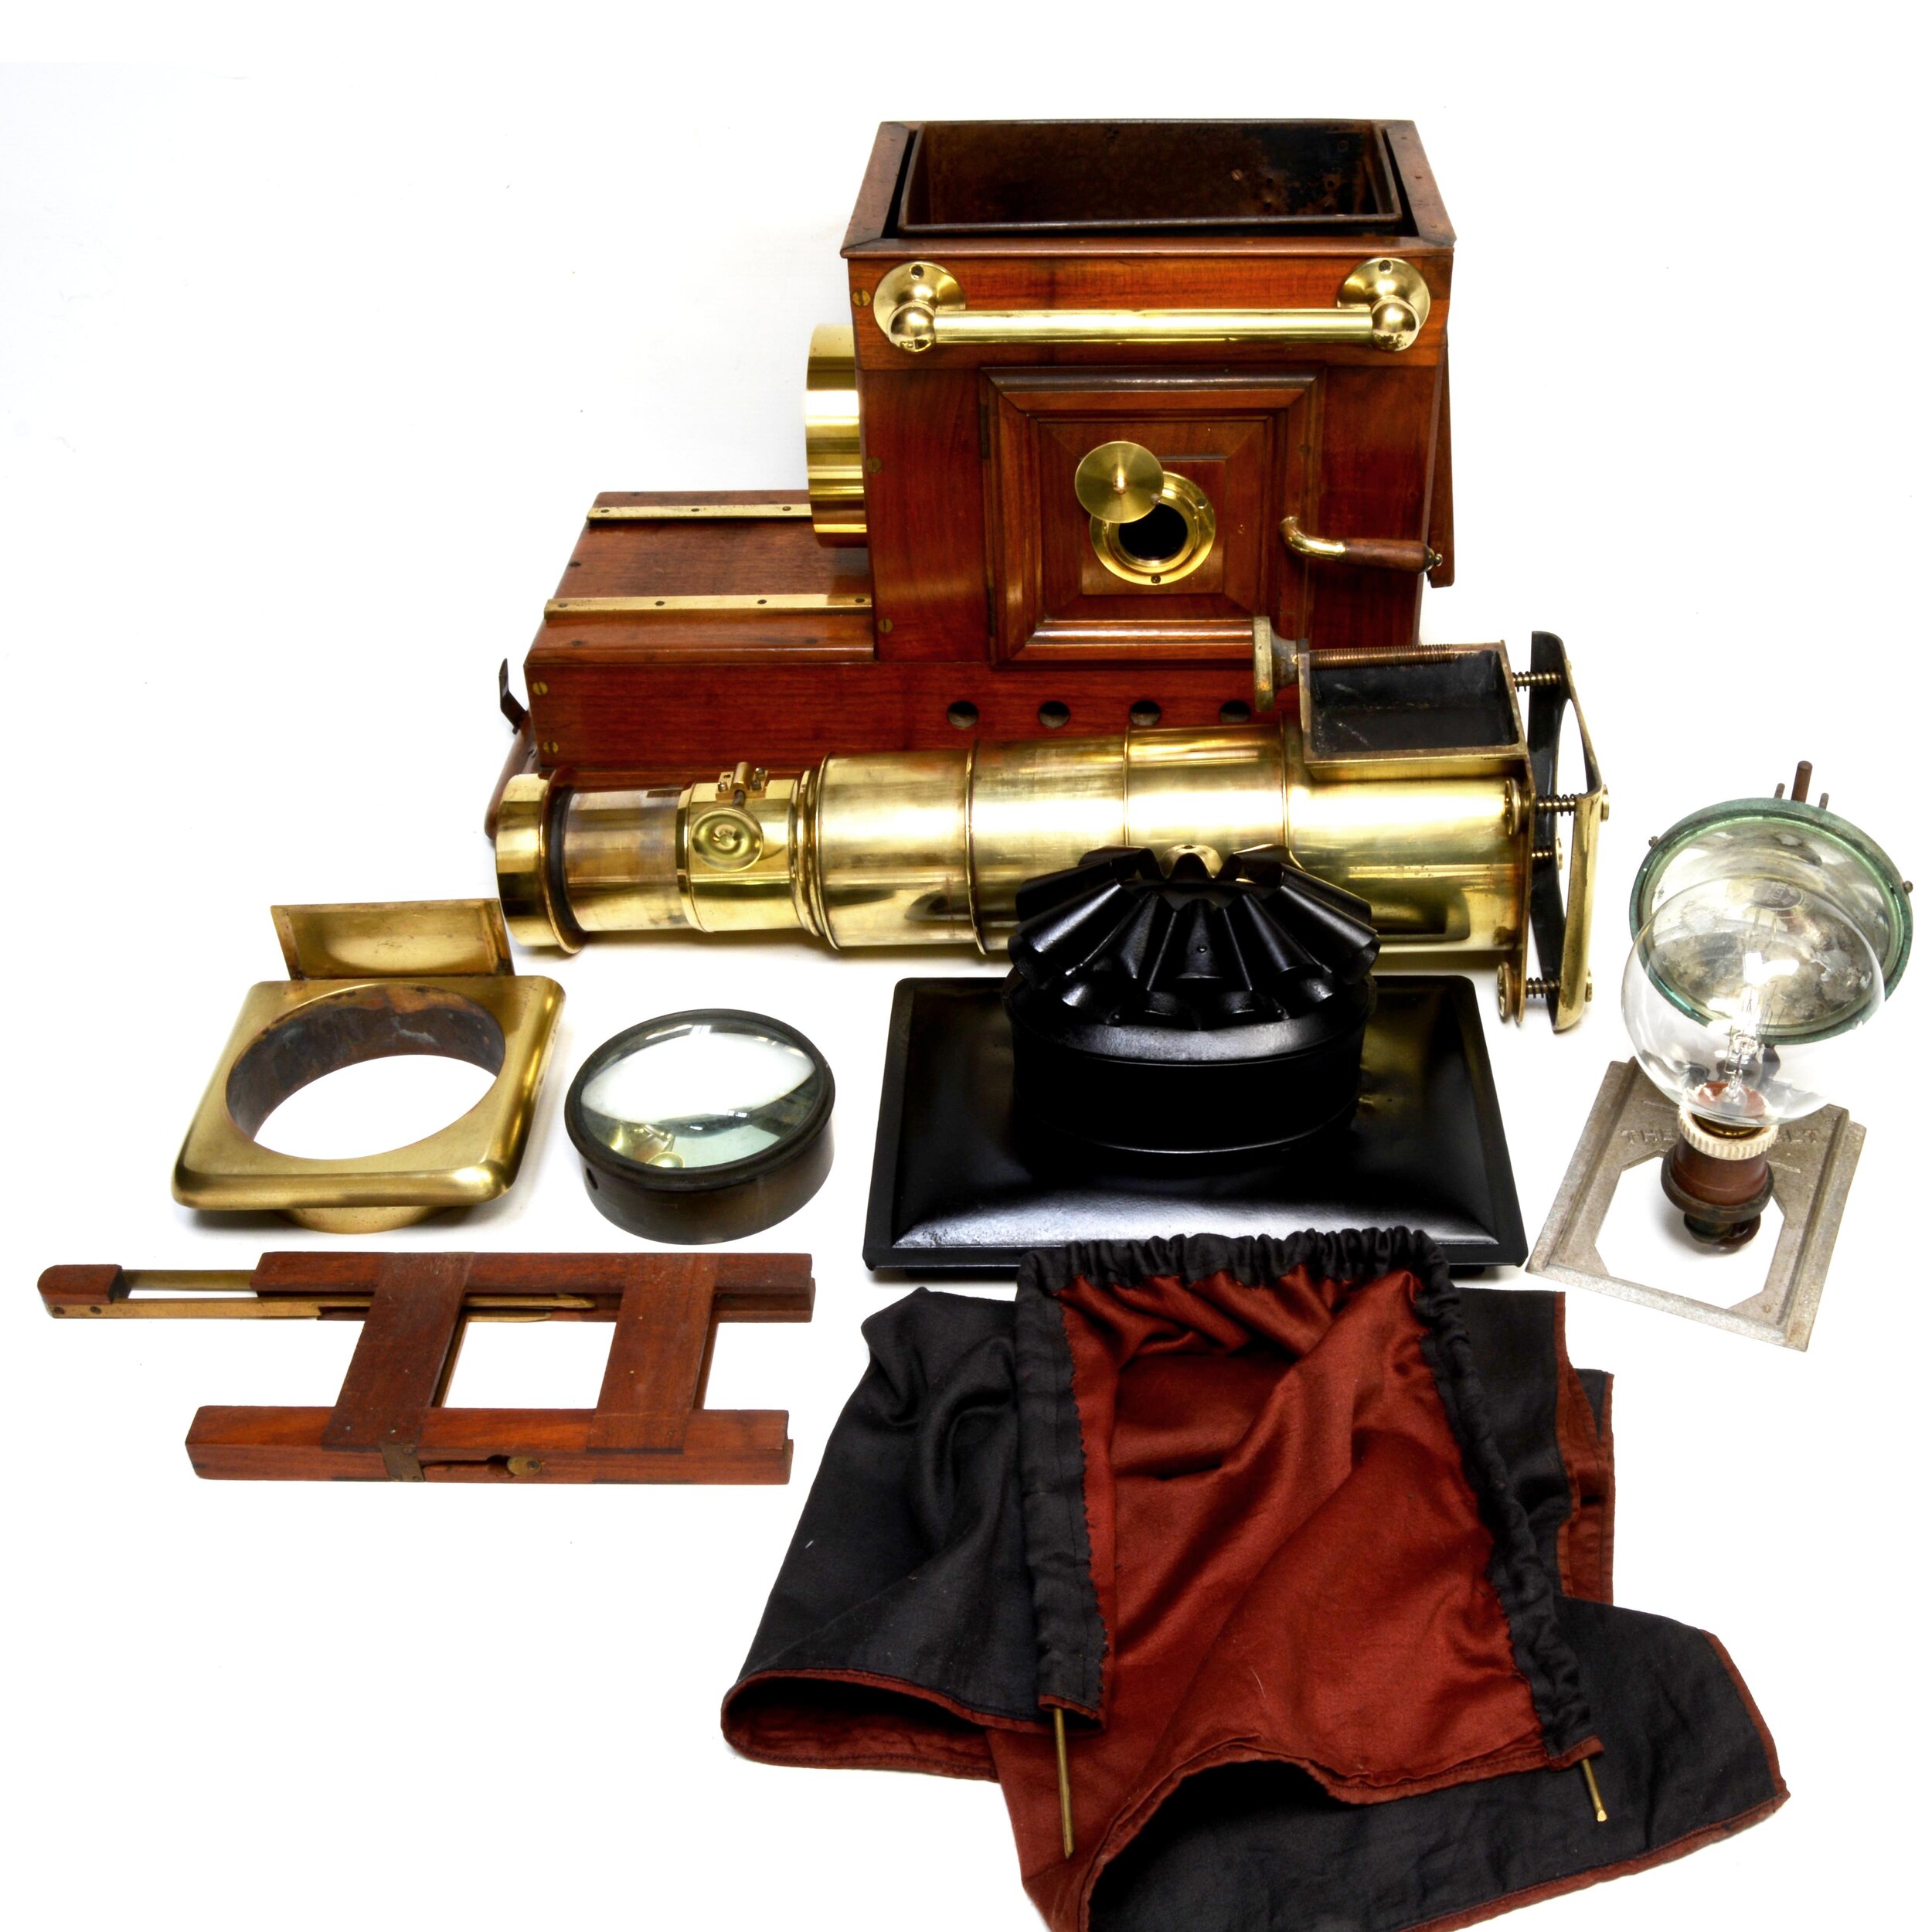 Mahogany and brass magic lantern by W C Hughes of London